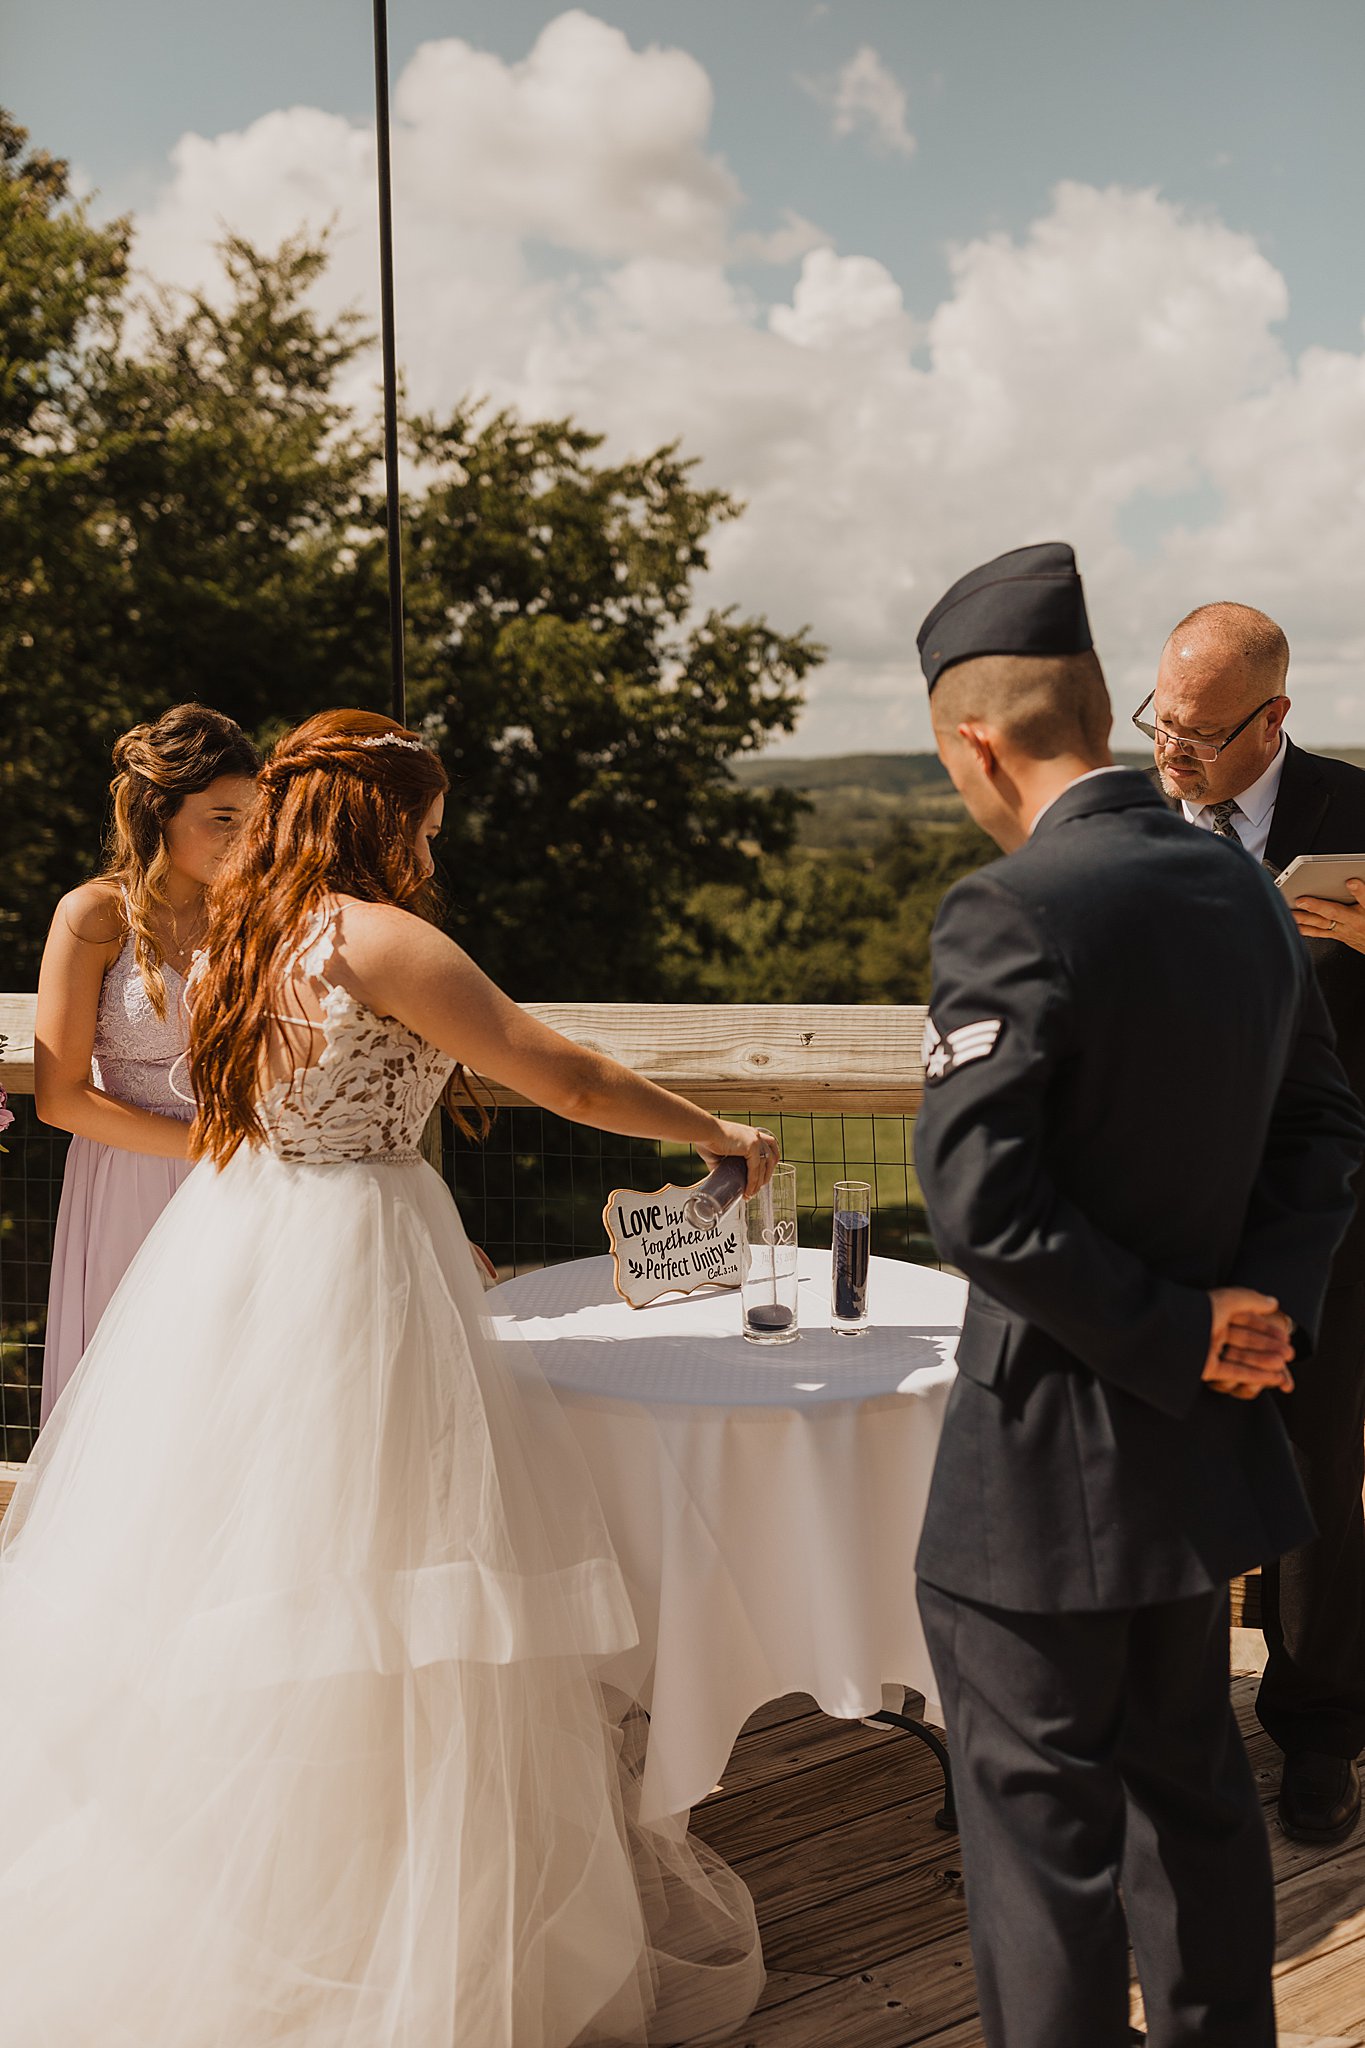 Chaumette Vineyards & Winery Wedding Ceremony | STL Wedding Photographer